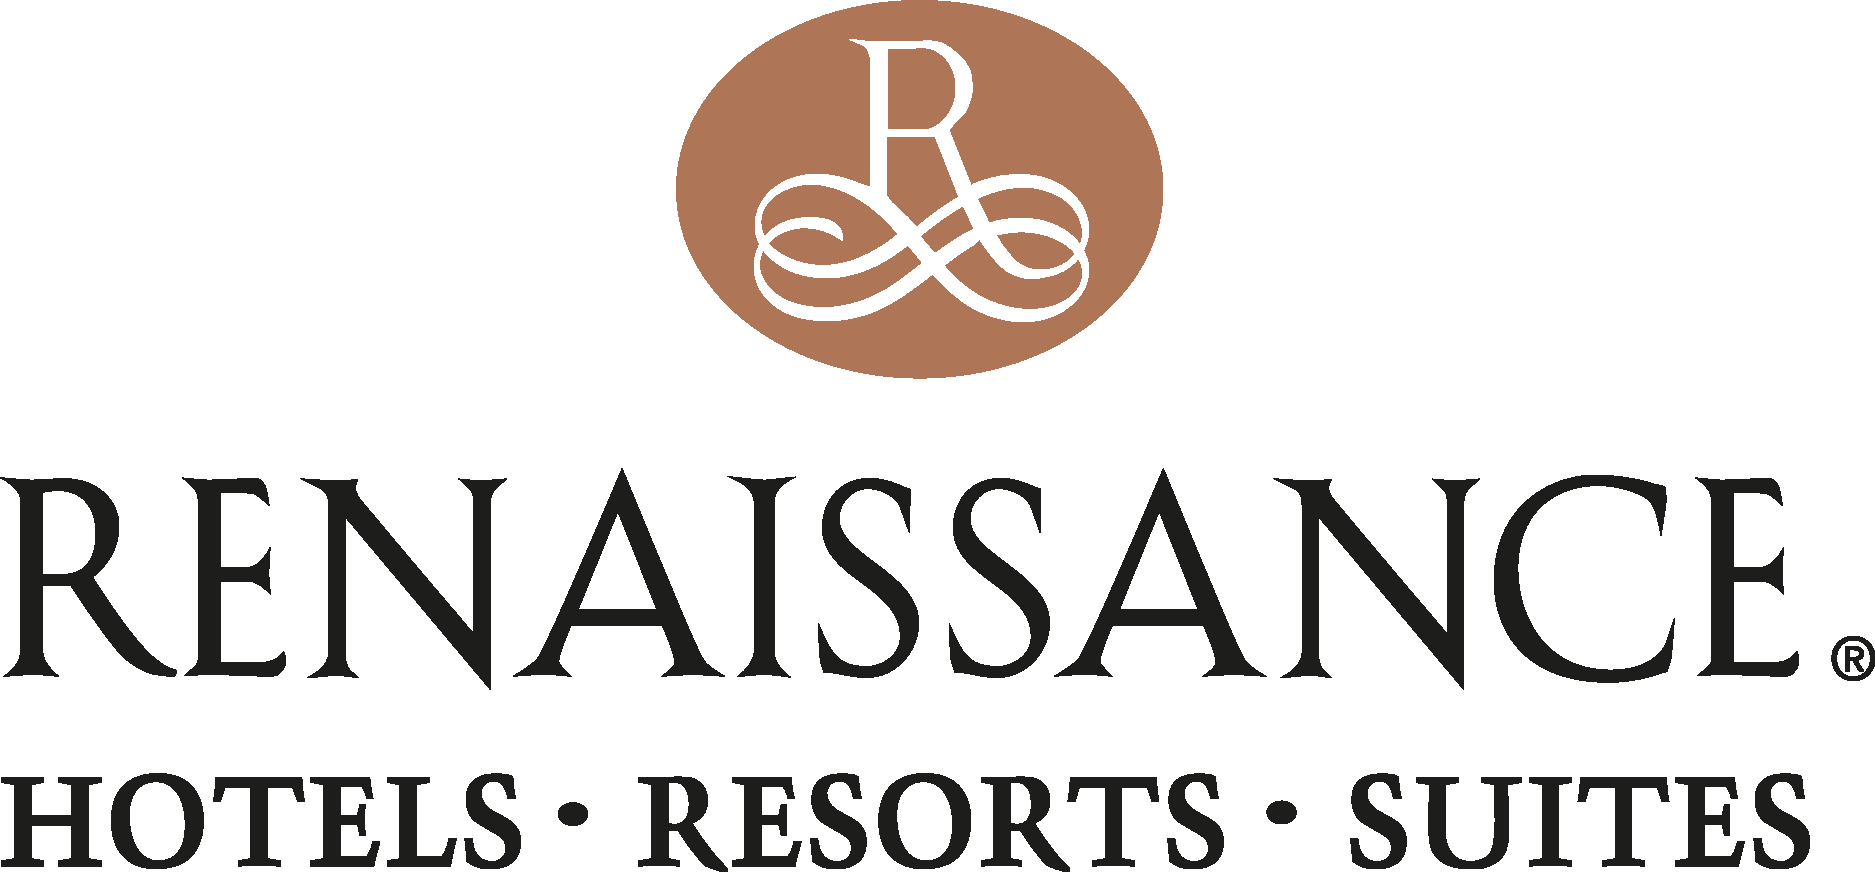 Renaissance Hotels Resorts Suites Logo Vector